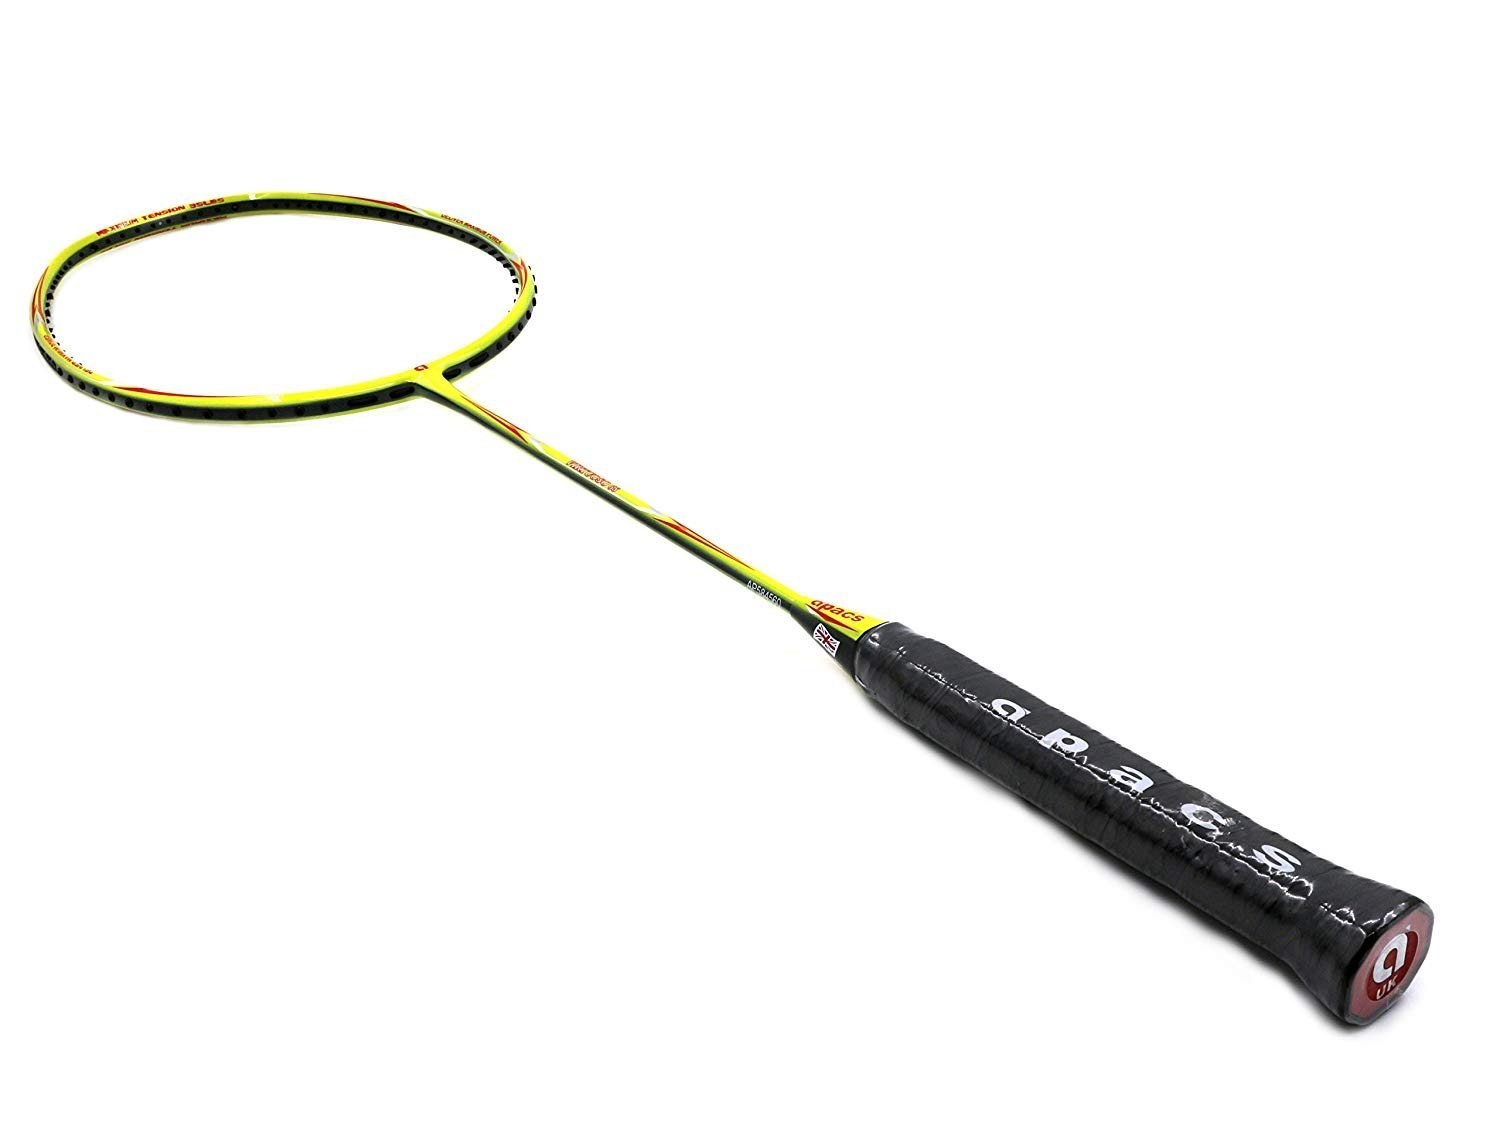 APACS Virtuoso 68 Badminton Racket